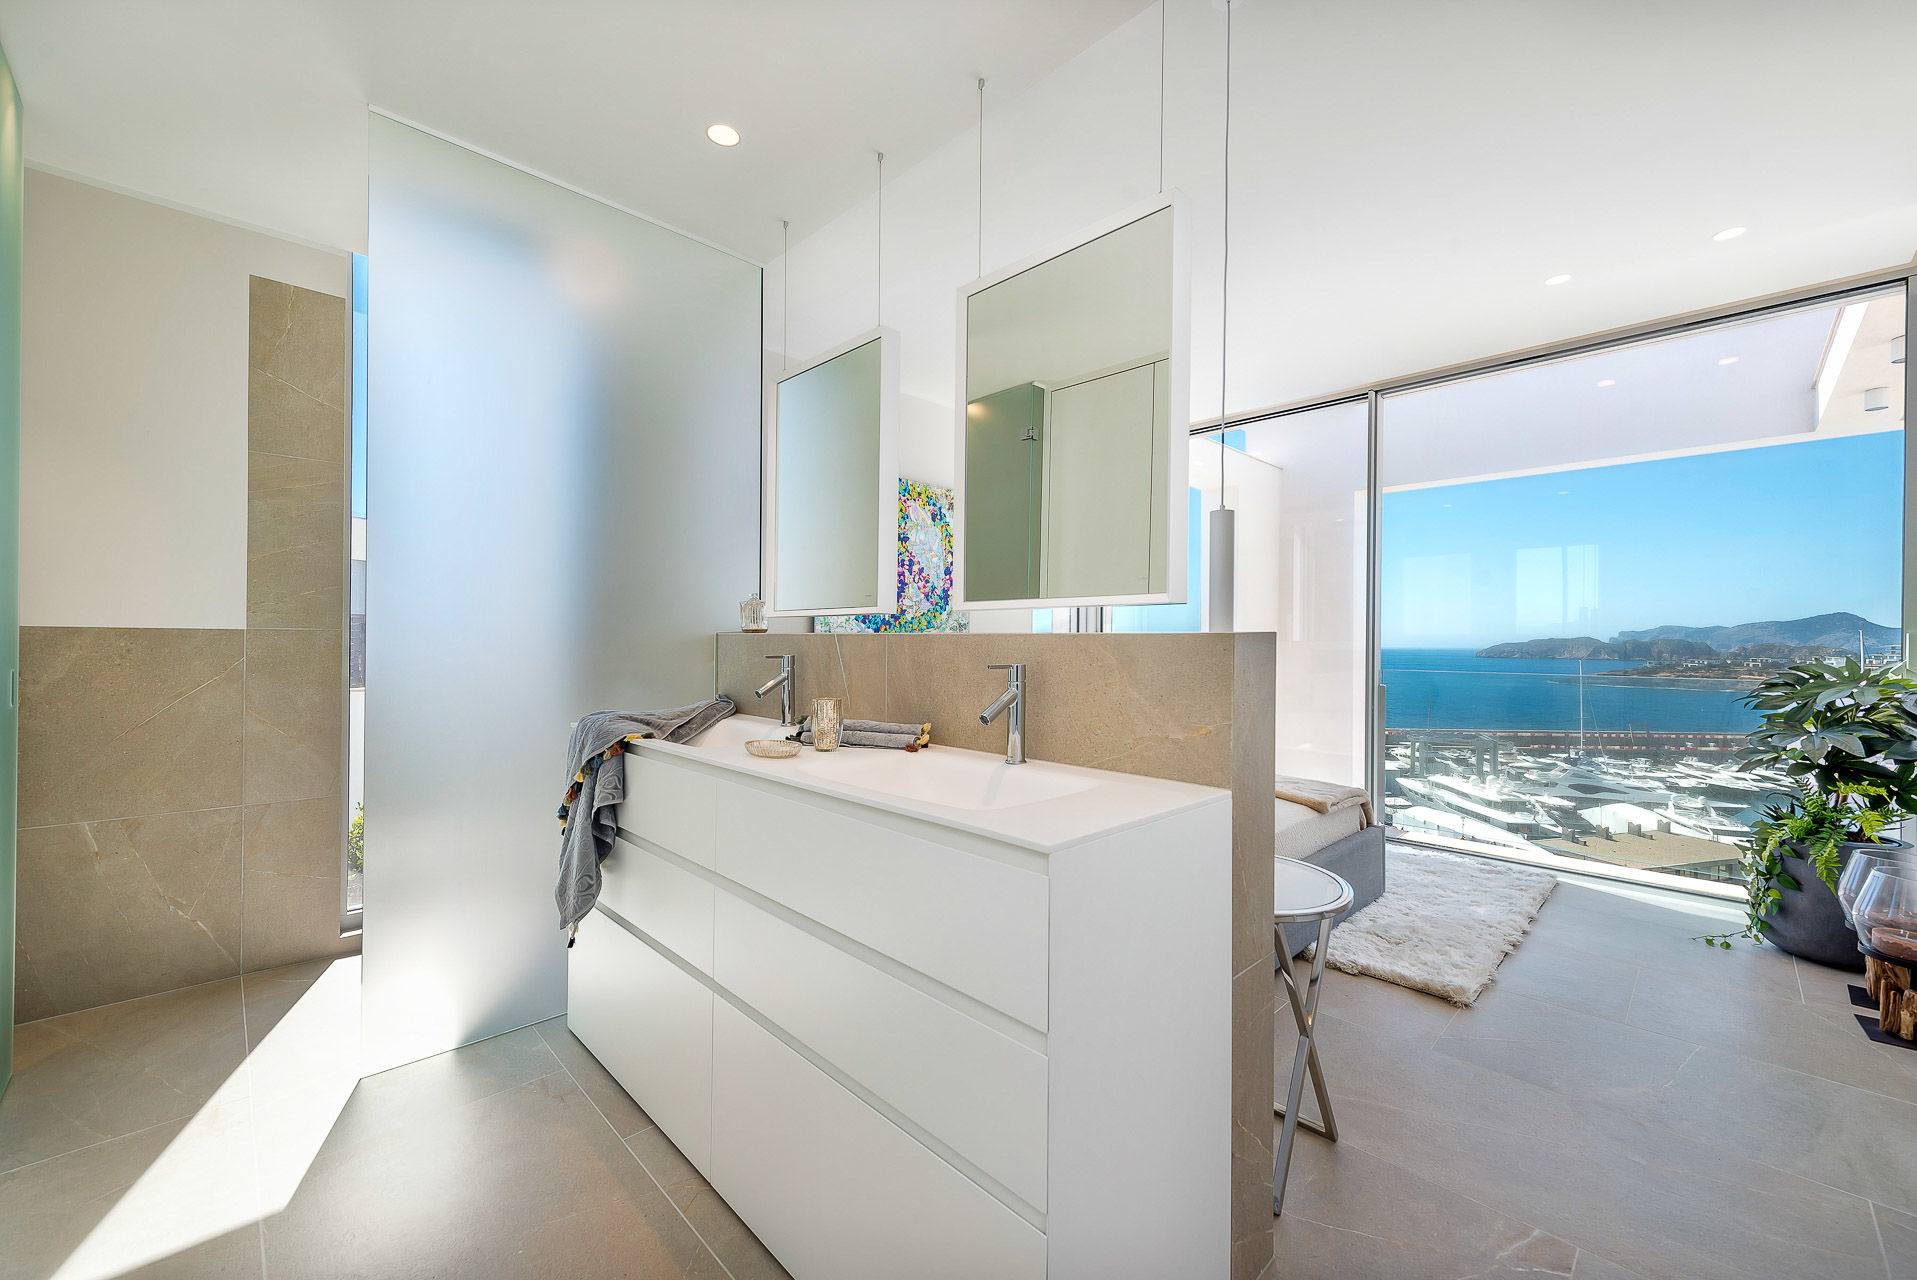 Luxurious new built front line villa - Bathroom 2